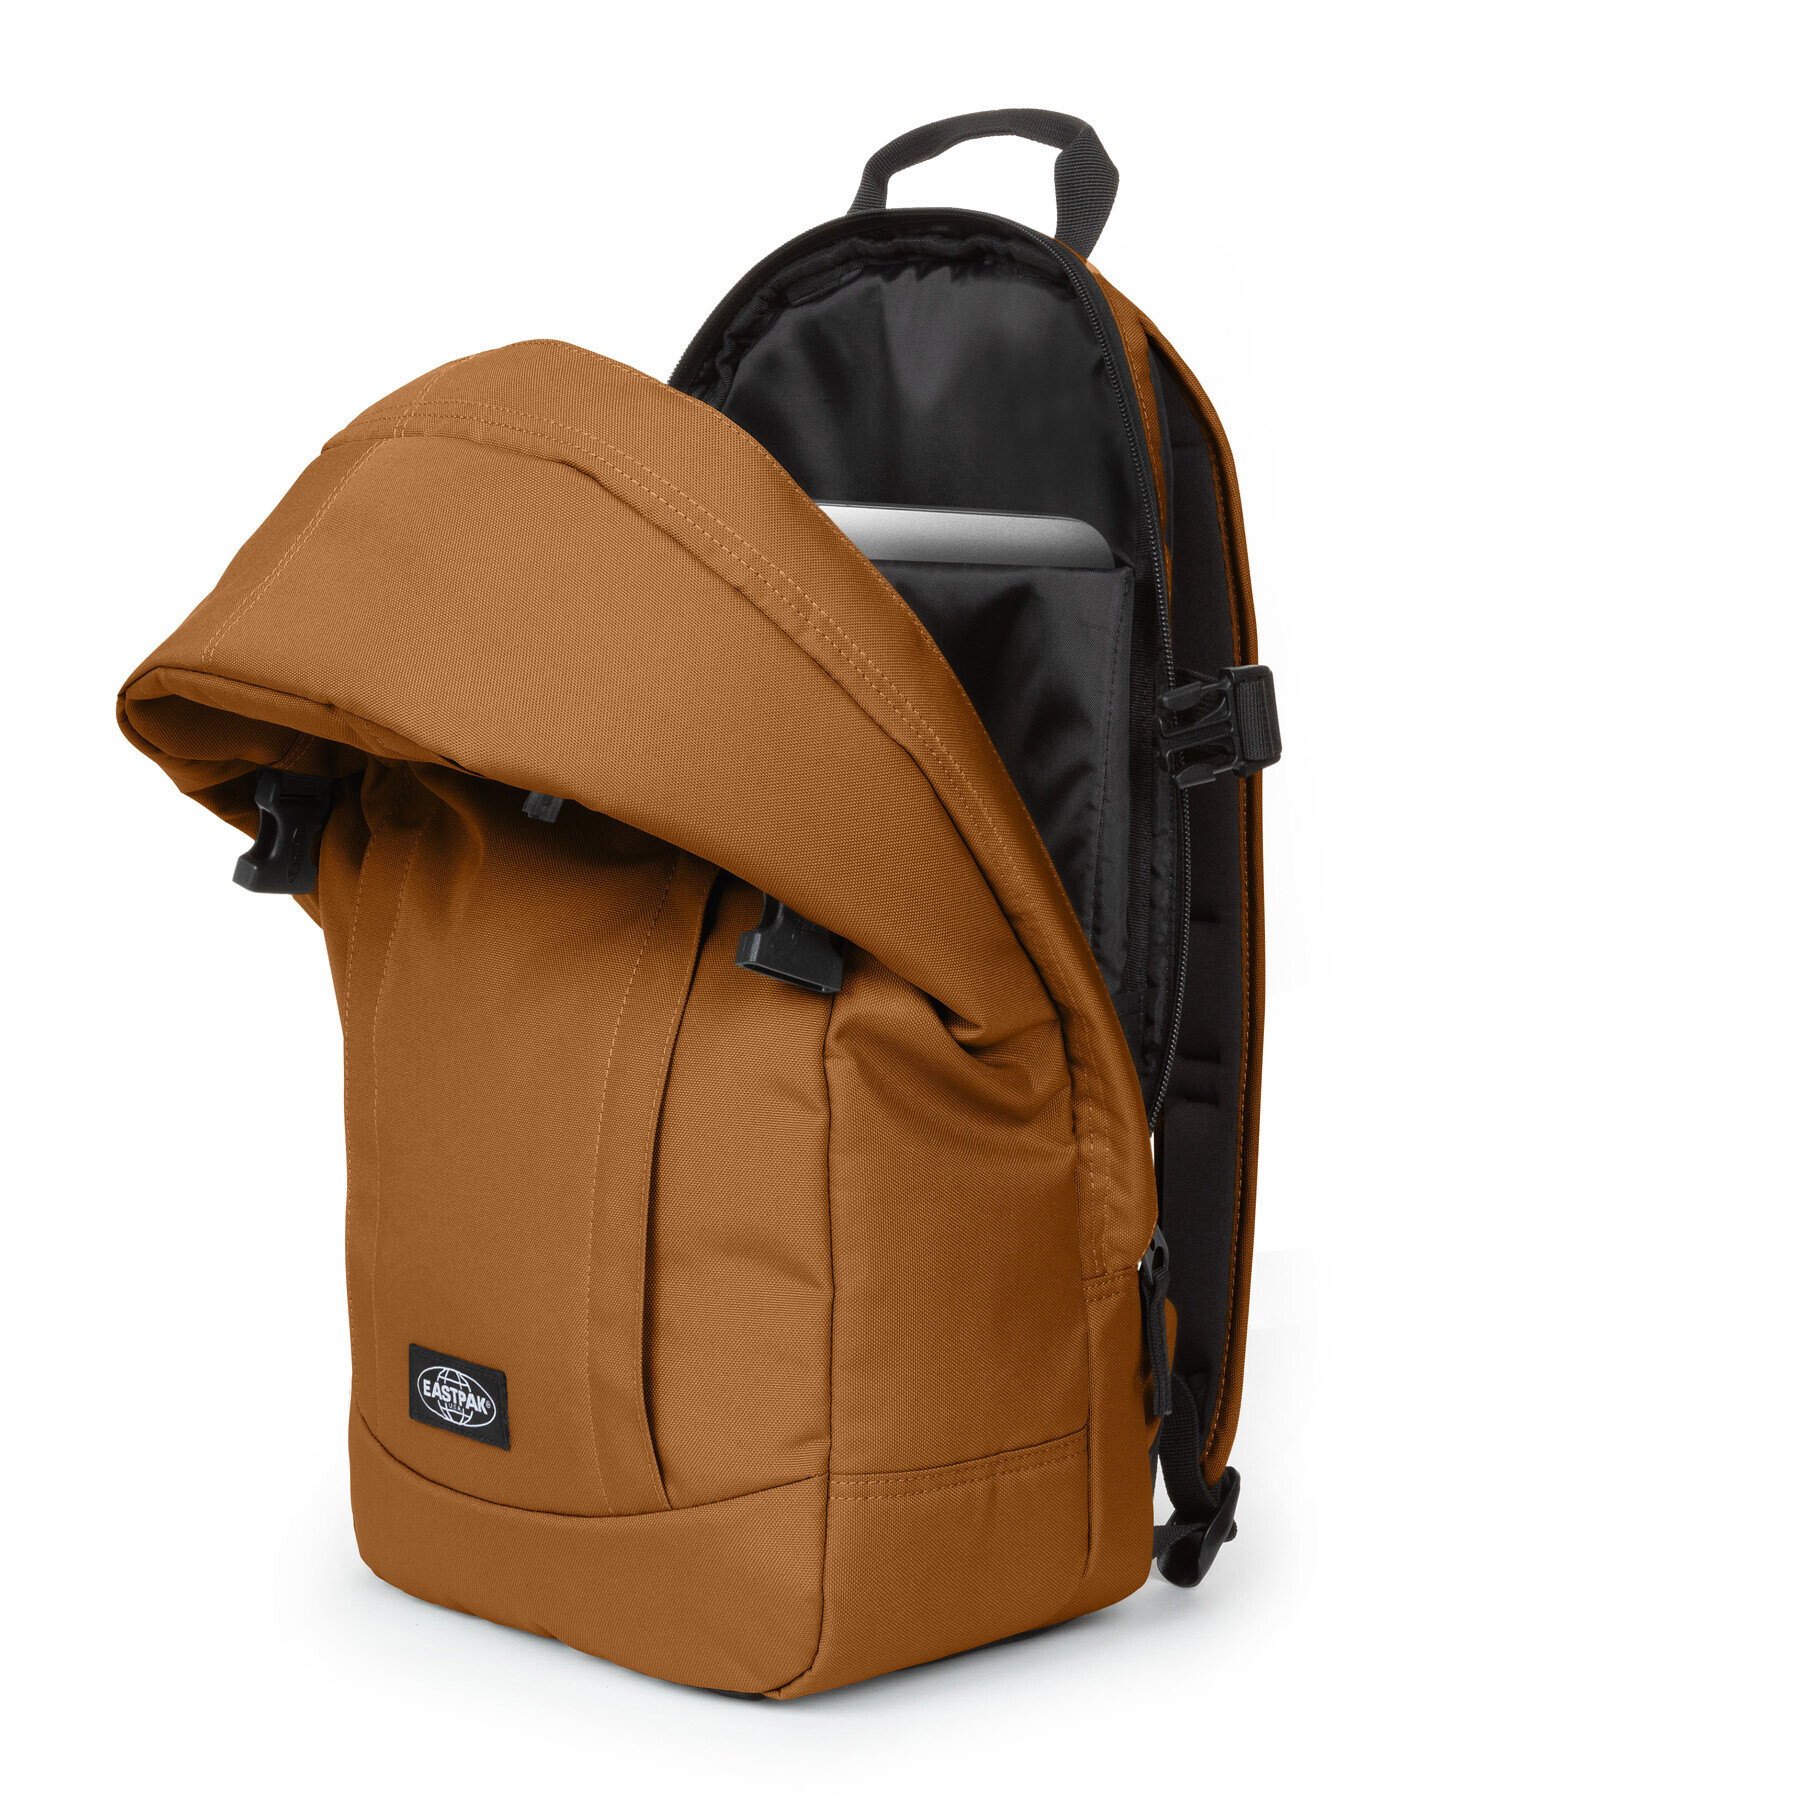 Backpack Eastpak Safefloid